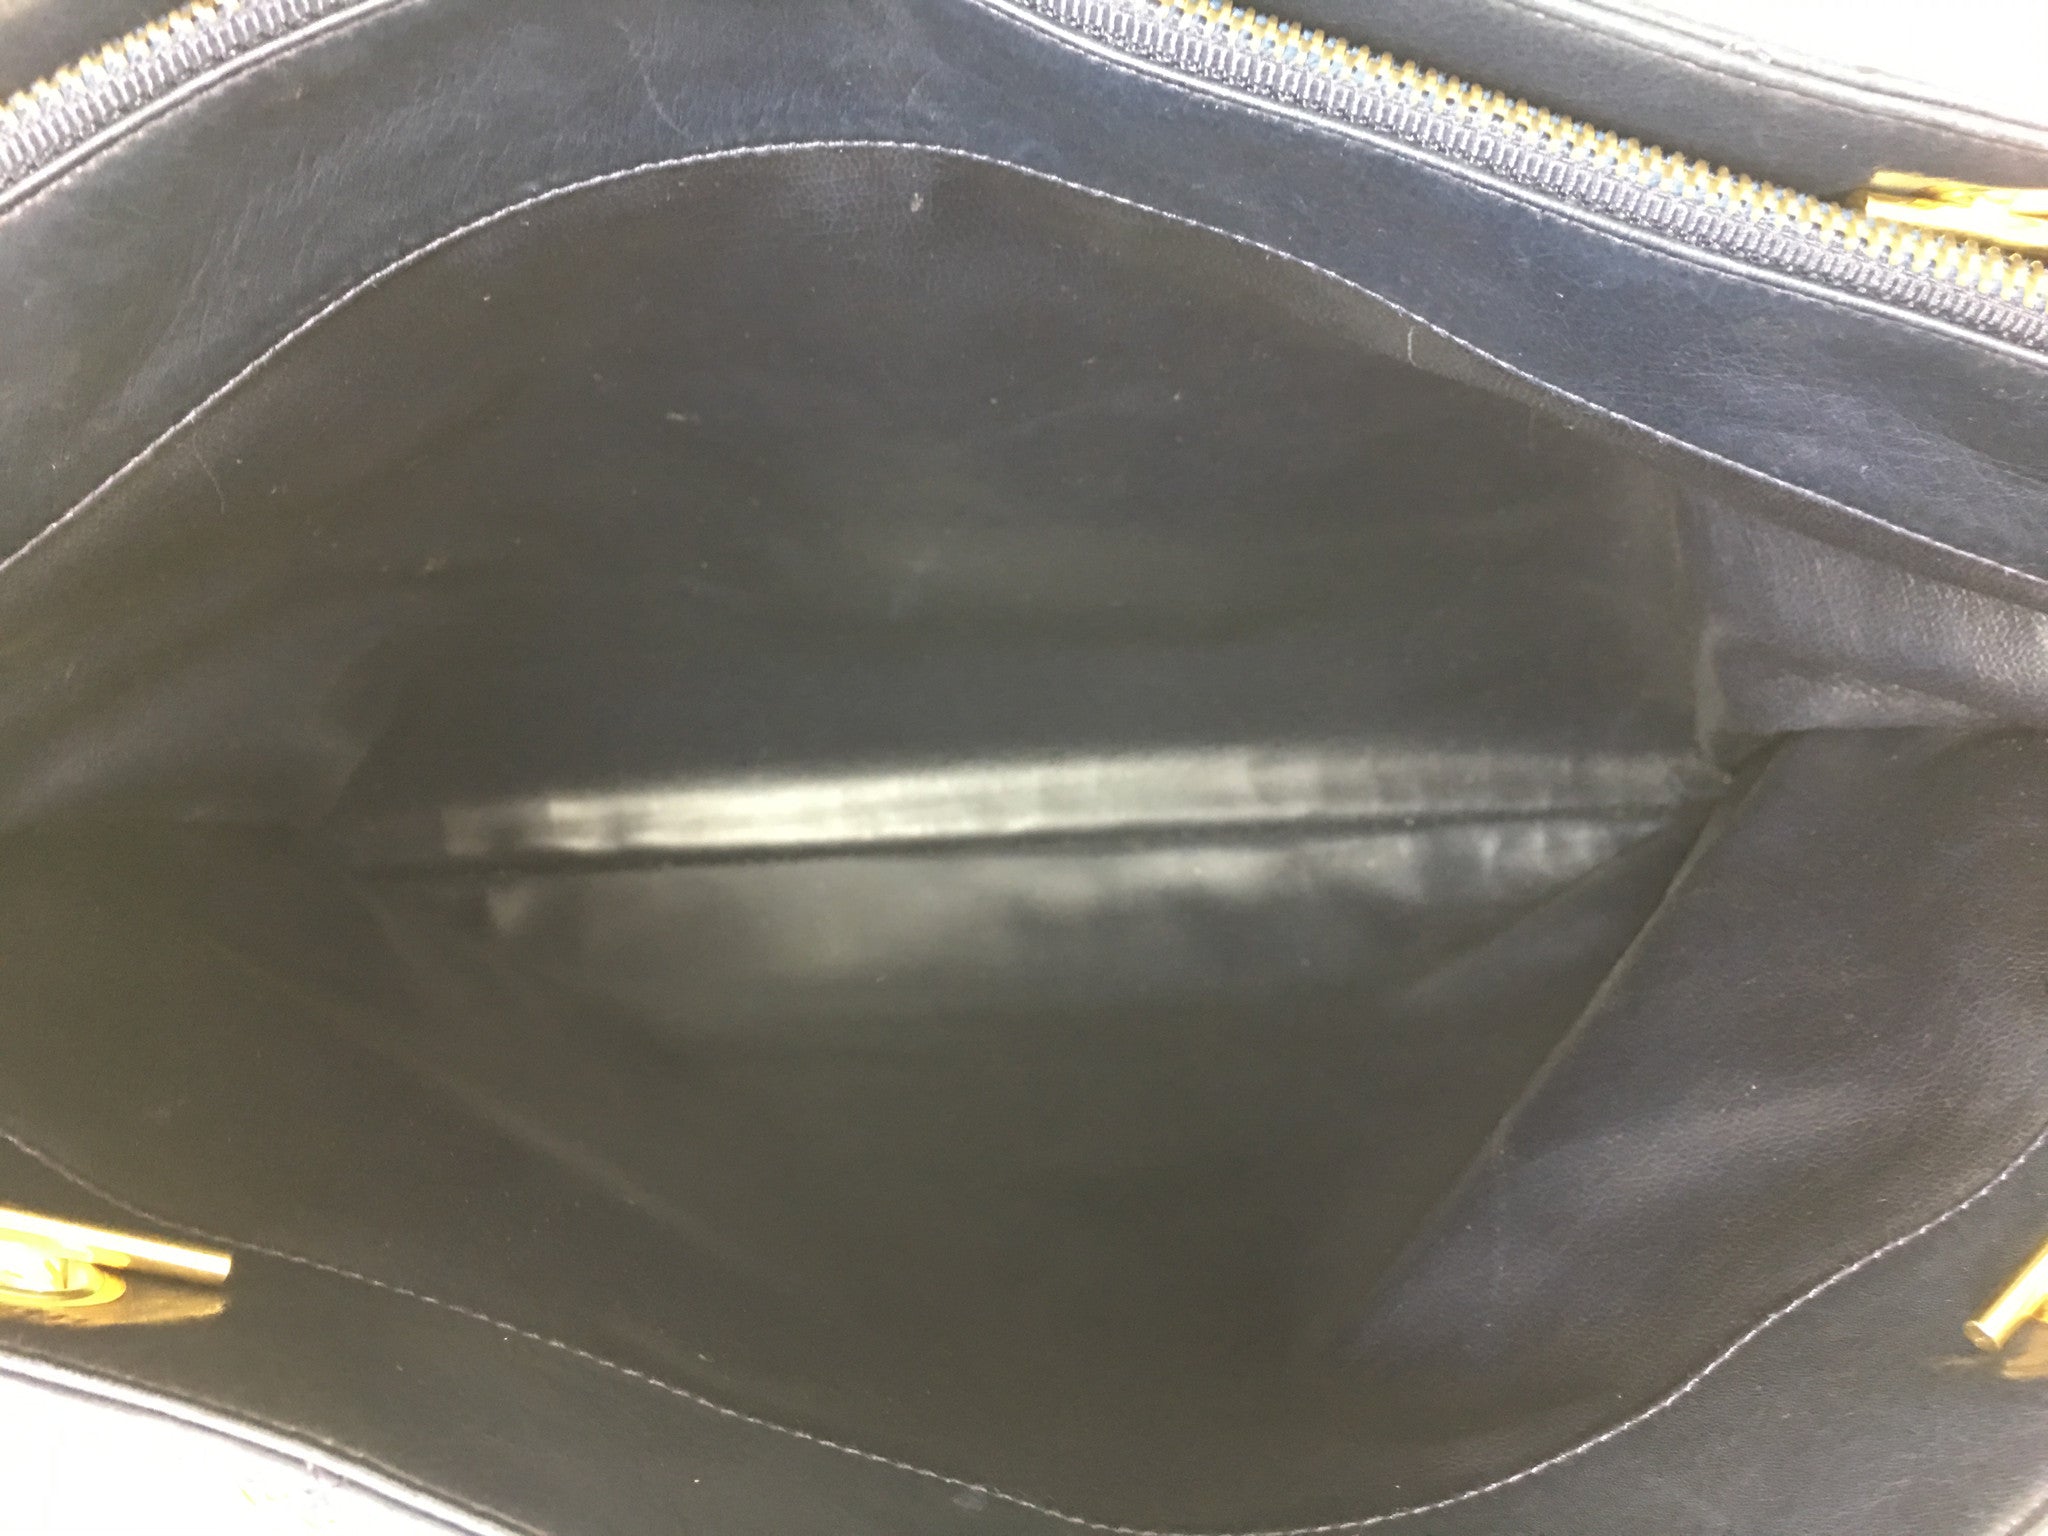 CHANEL Dark Navy Lambskin Quilted CC Charm Shoulder Bag